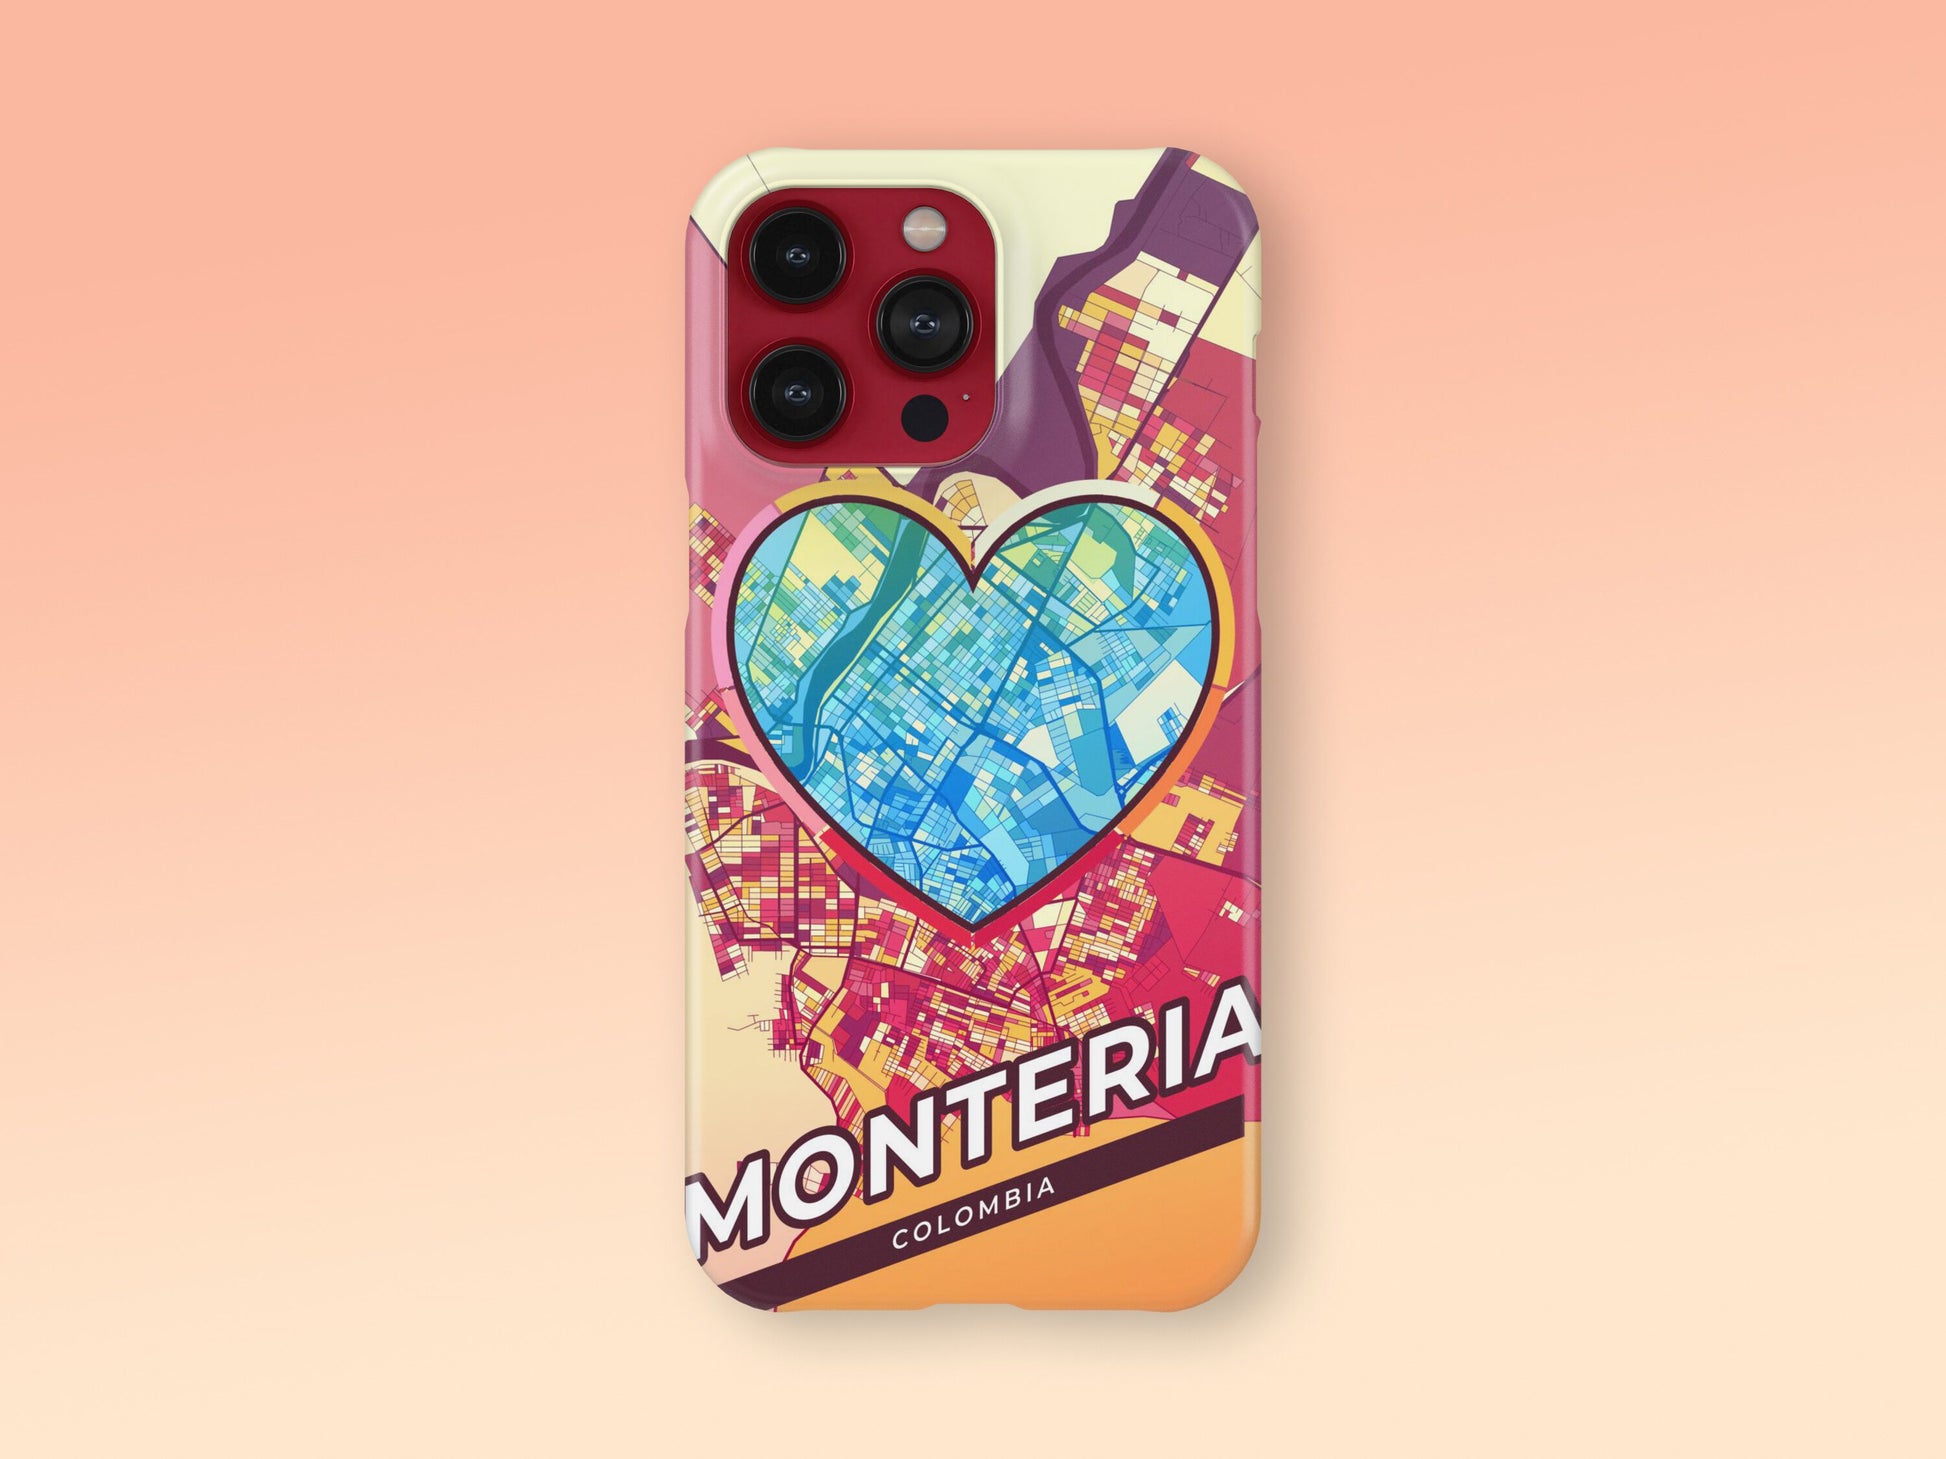 Monteria Colombia slim phone case with colorful icon 2